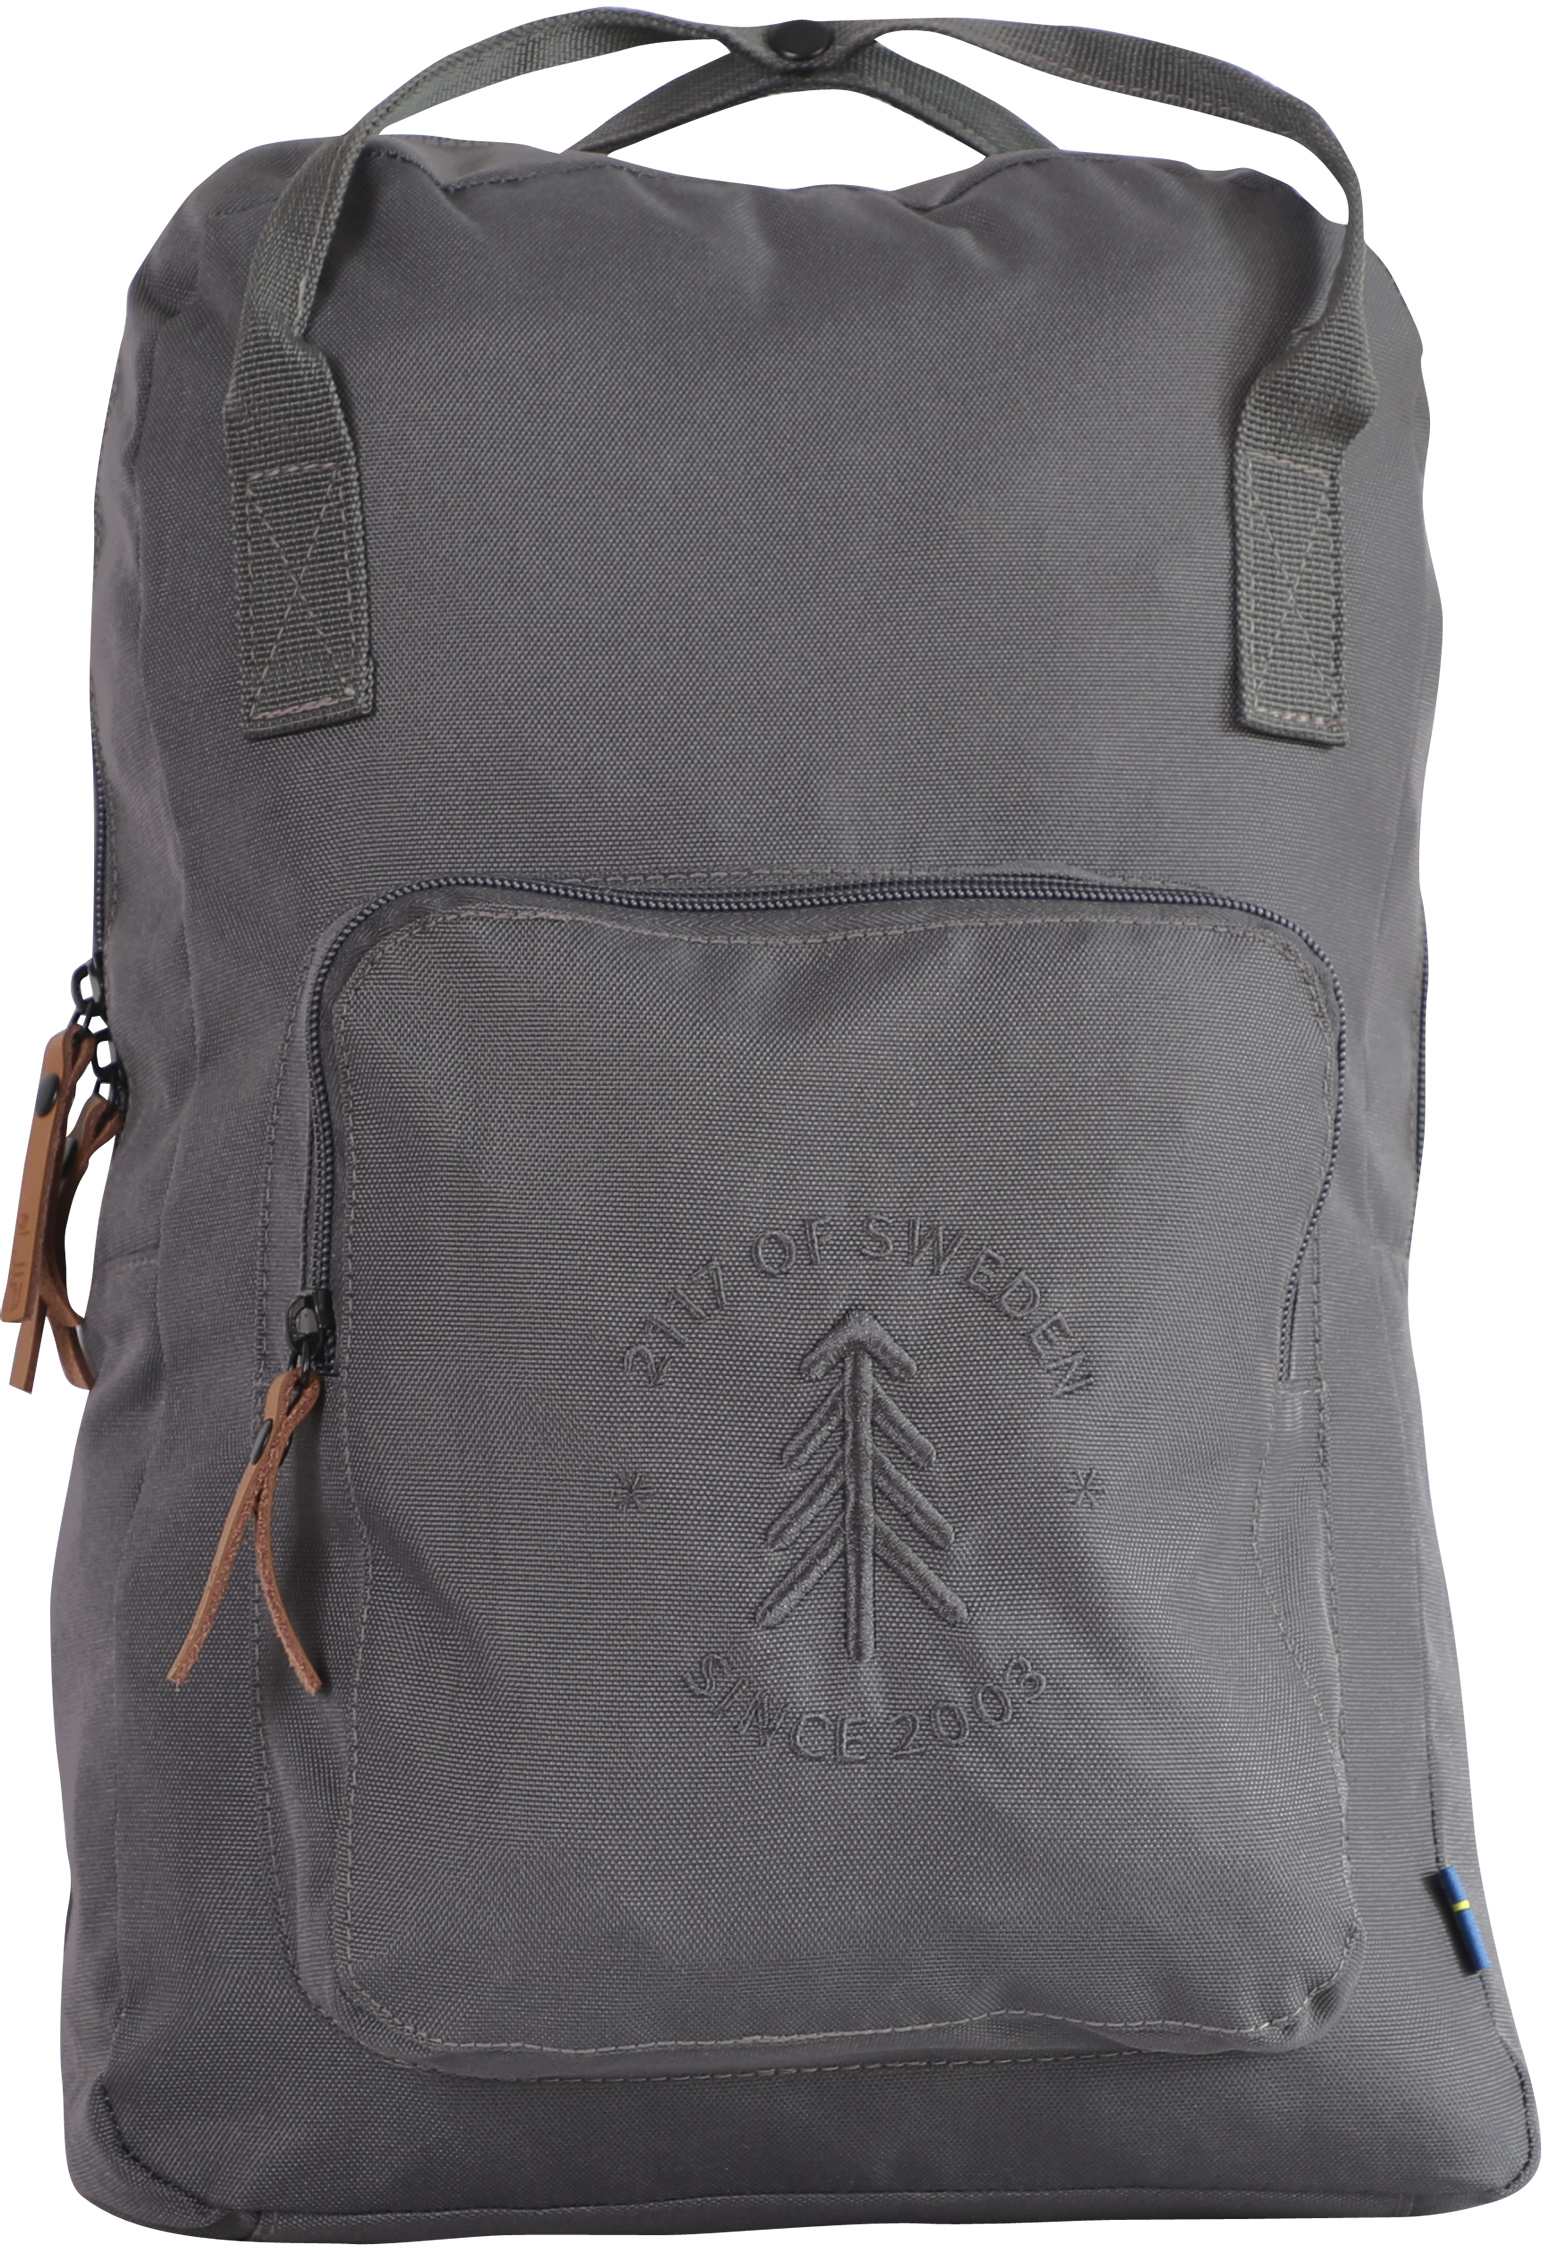 Medium city backpack